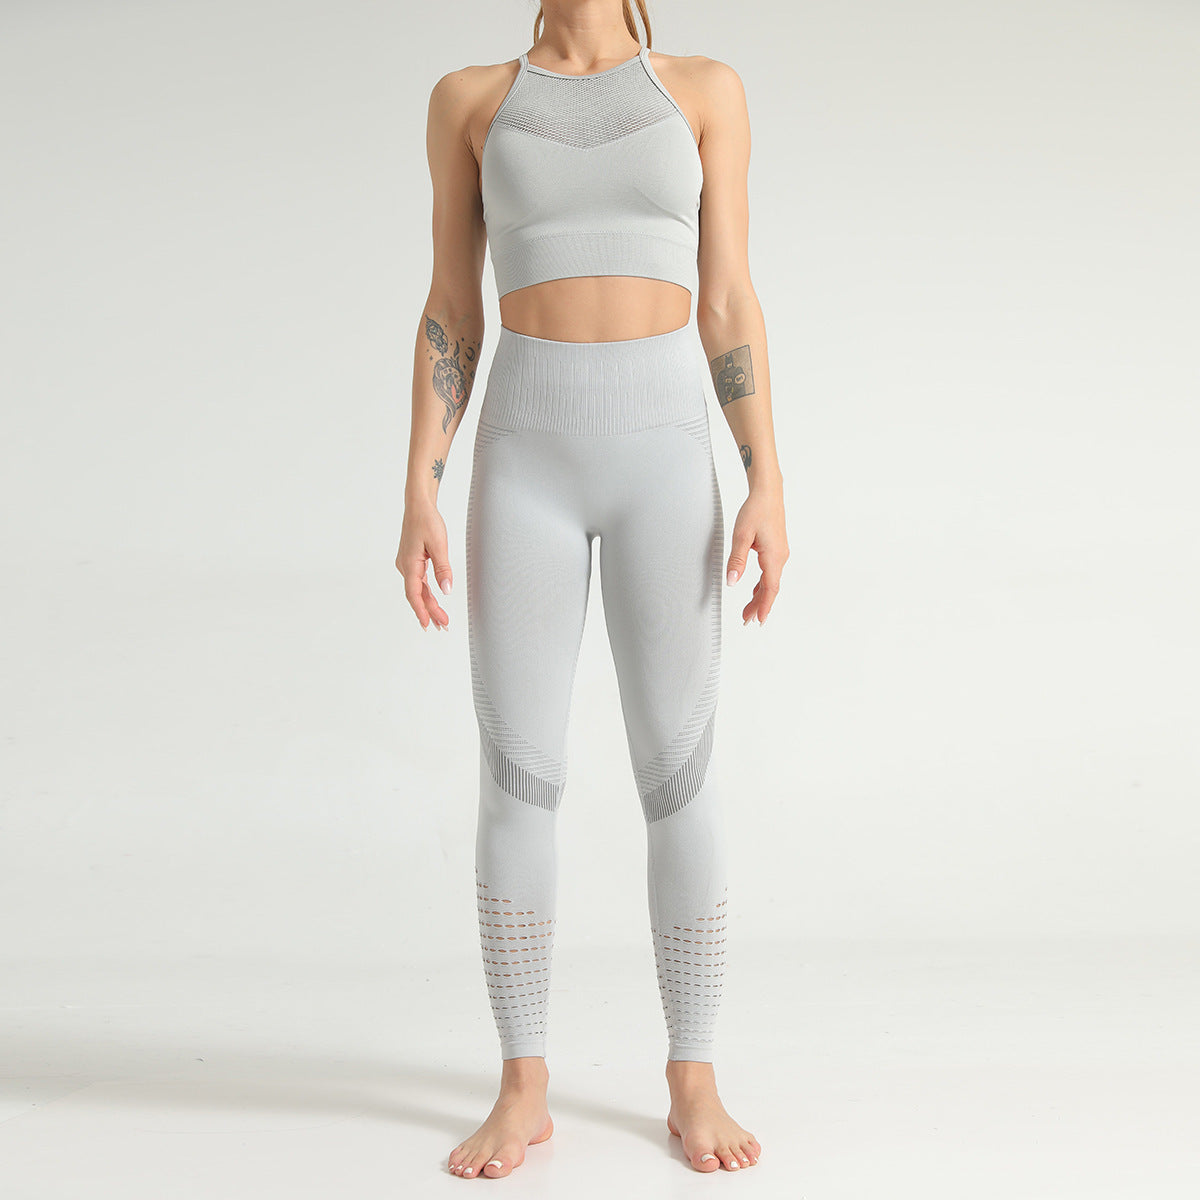 Women's yoga trousers